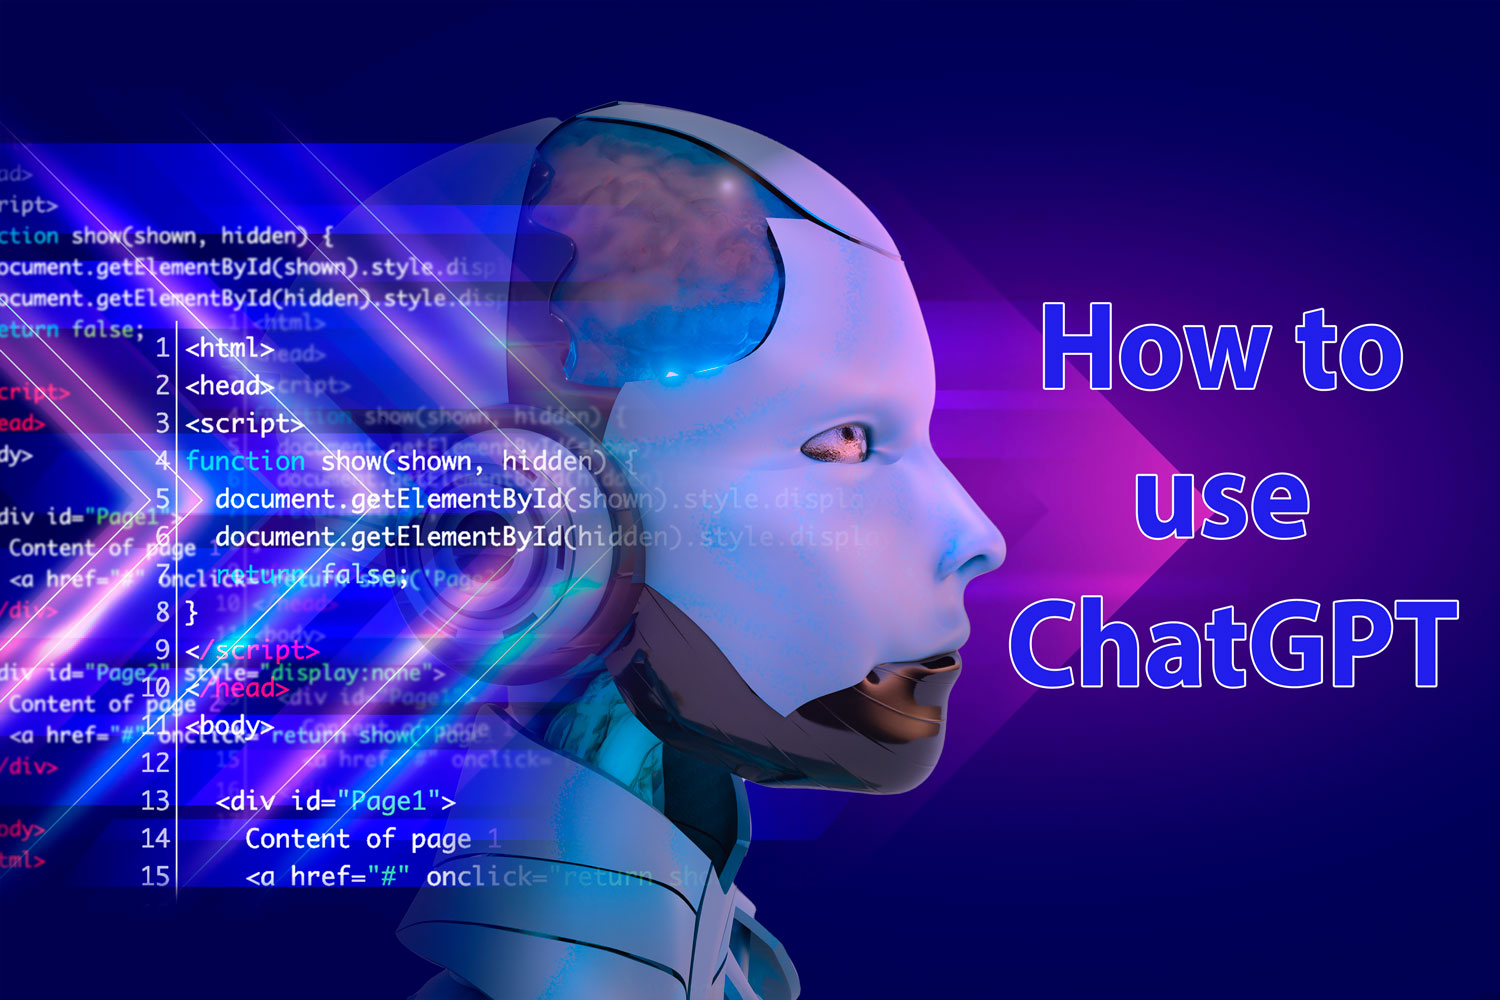 Use ChatGPT